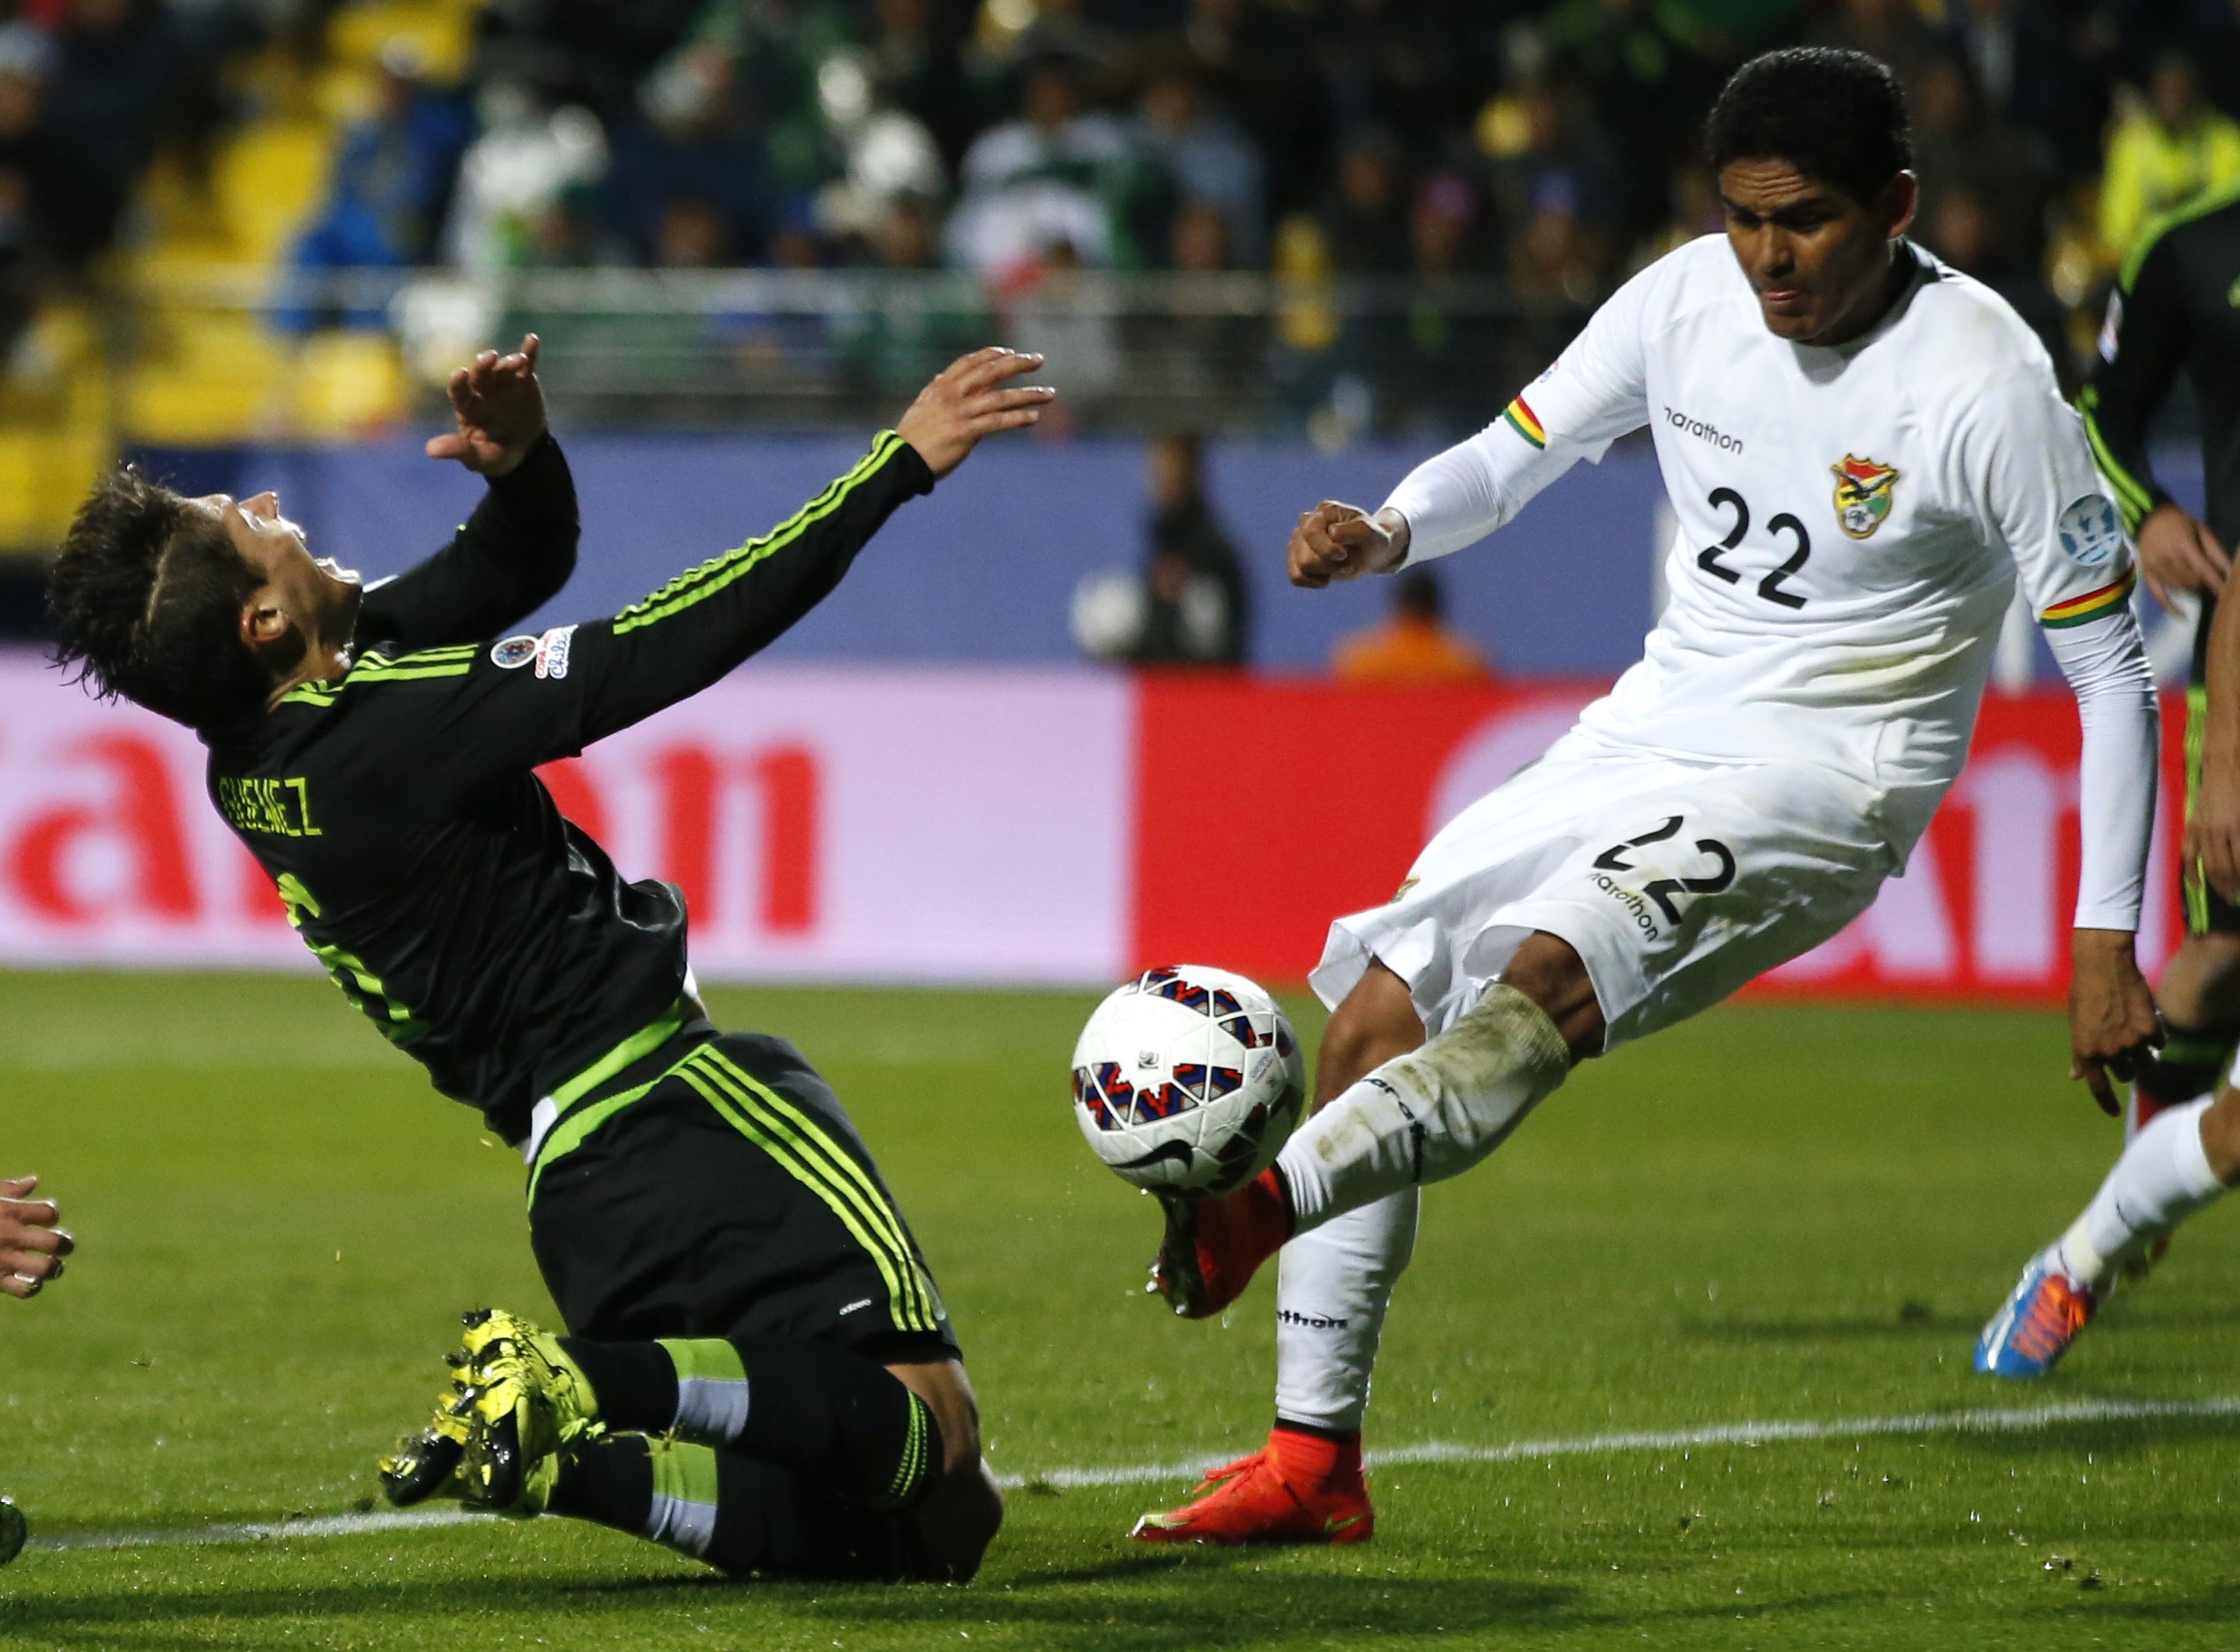 Mexico's Javier Guemez falls as Bolivia's Edward Zenteno controls the ball